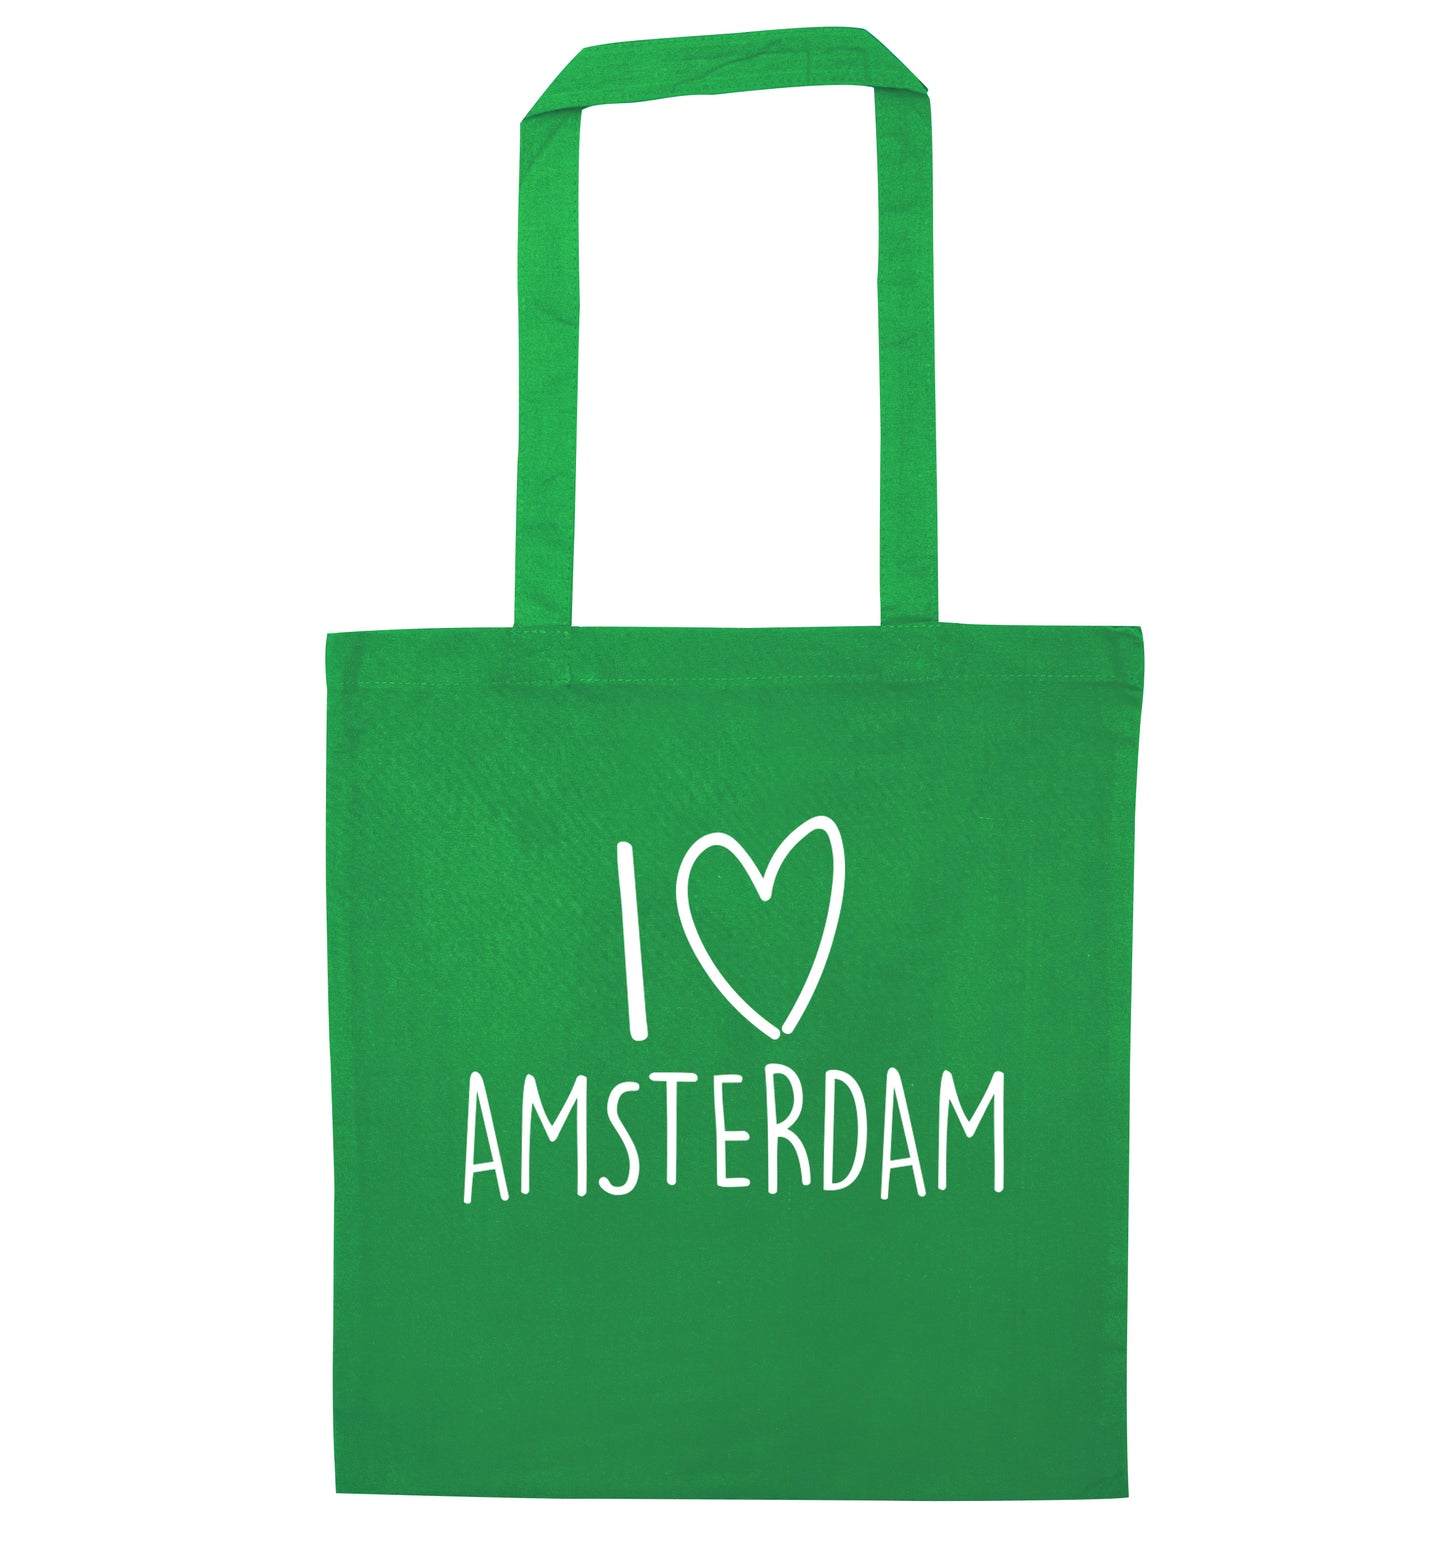 I love Amsterdam green tote bag